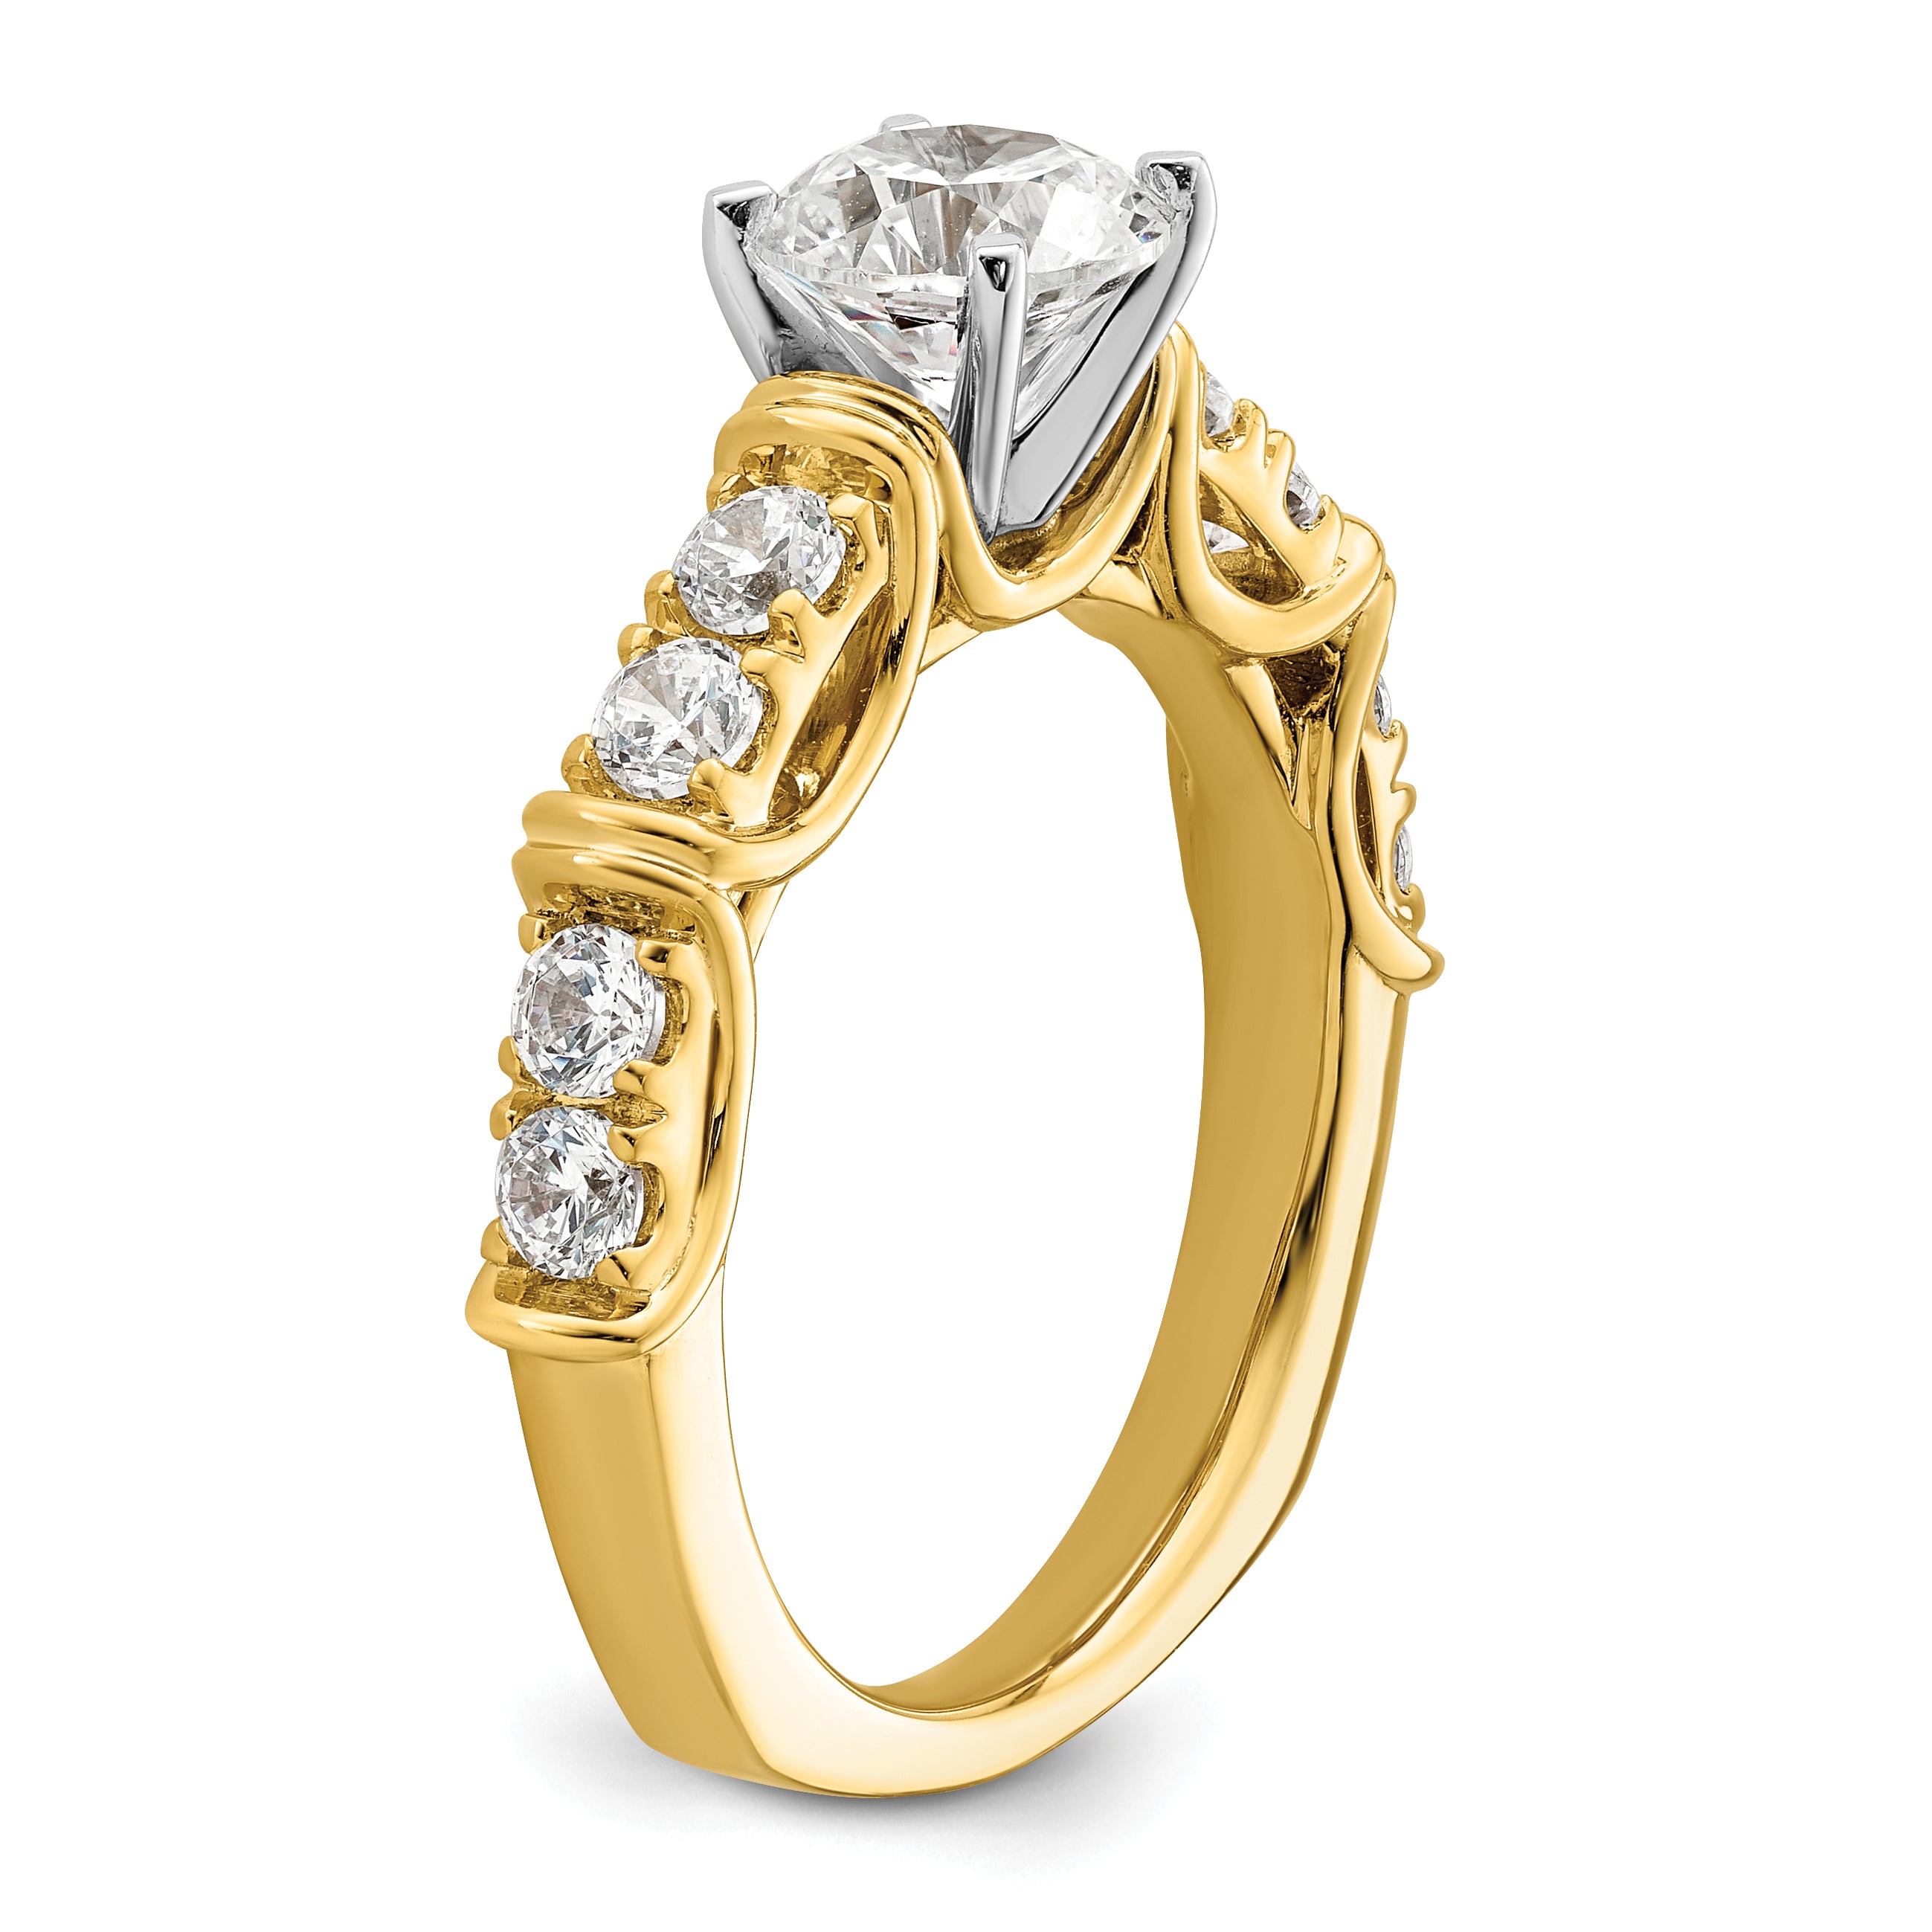 14K Lab Grown Diamond VS/SI GH,Semi-mount Engagement Ring